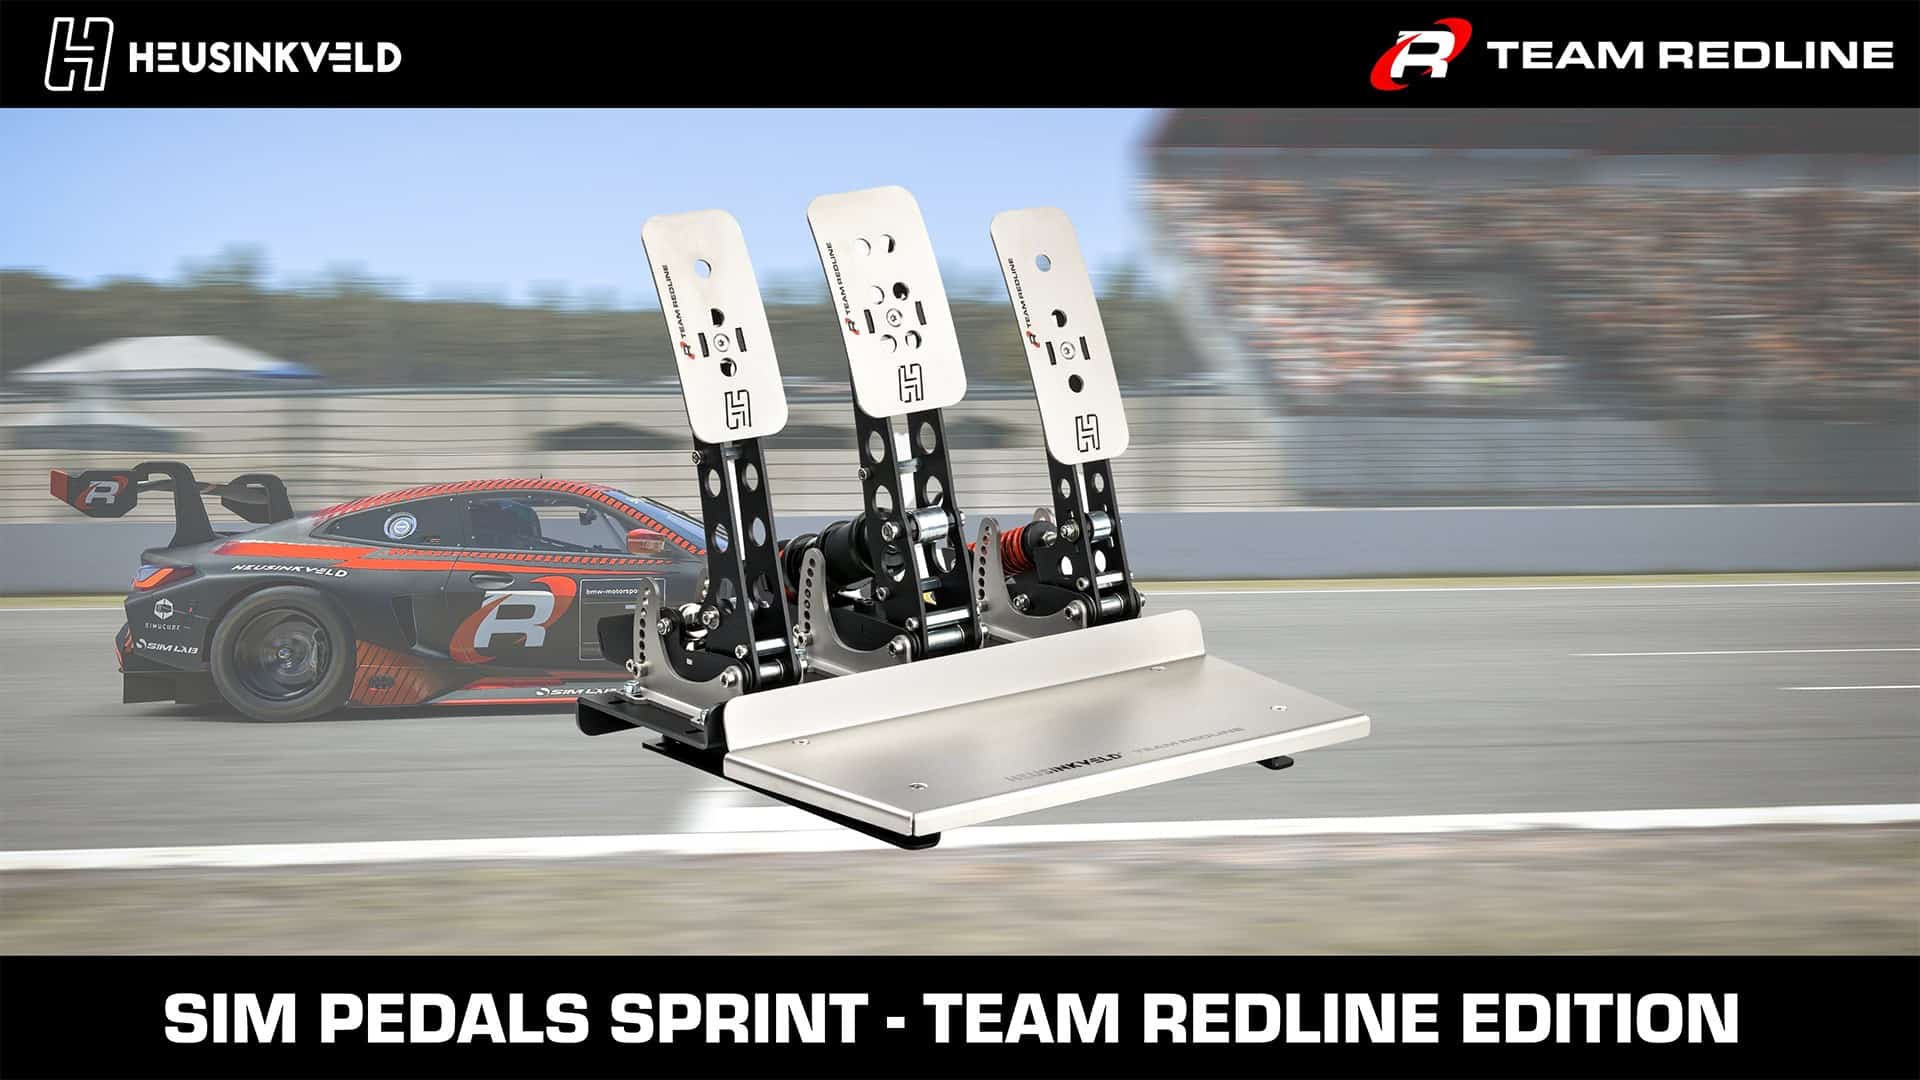 Heusinkveld, Team Redline announce special branded Sim Pedals Sprint